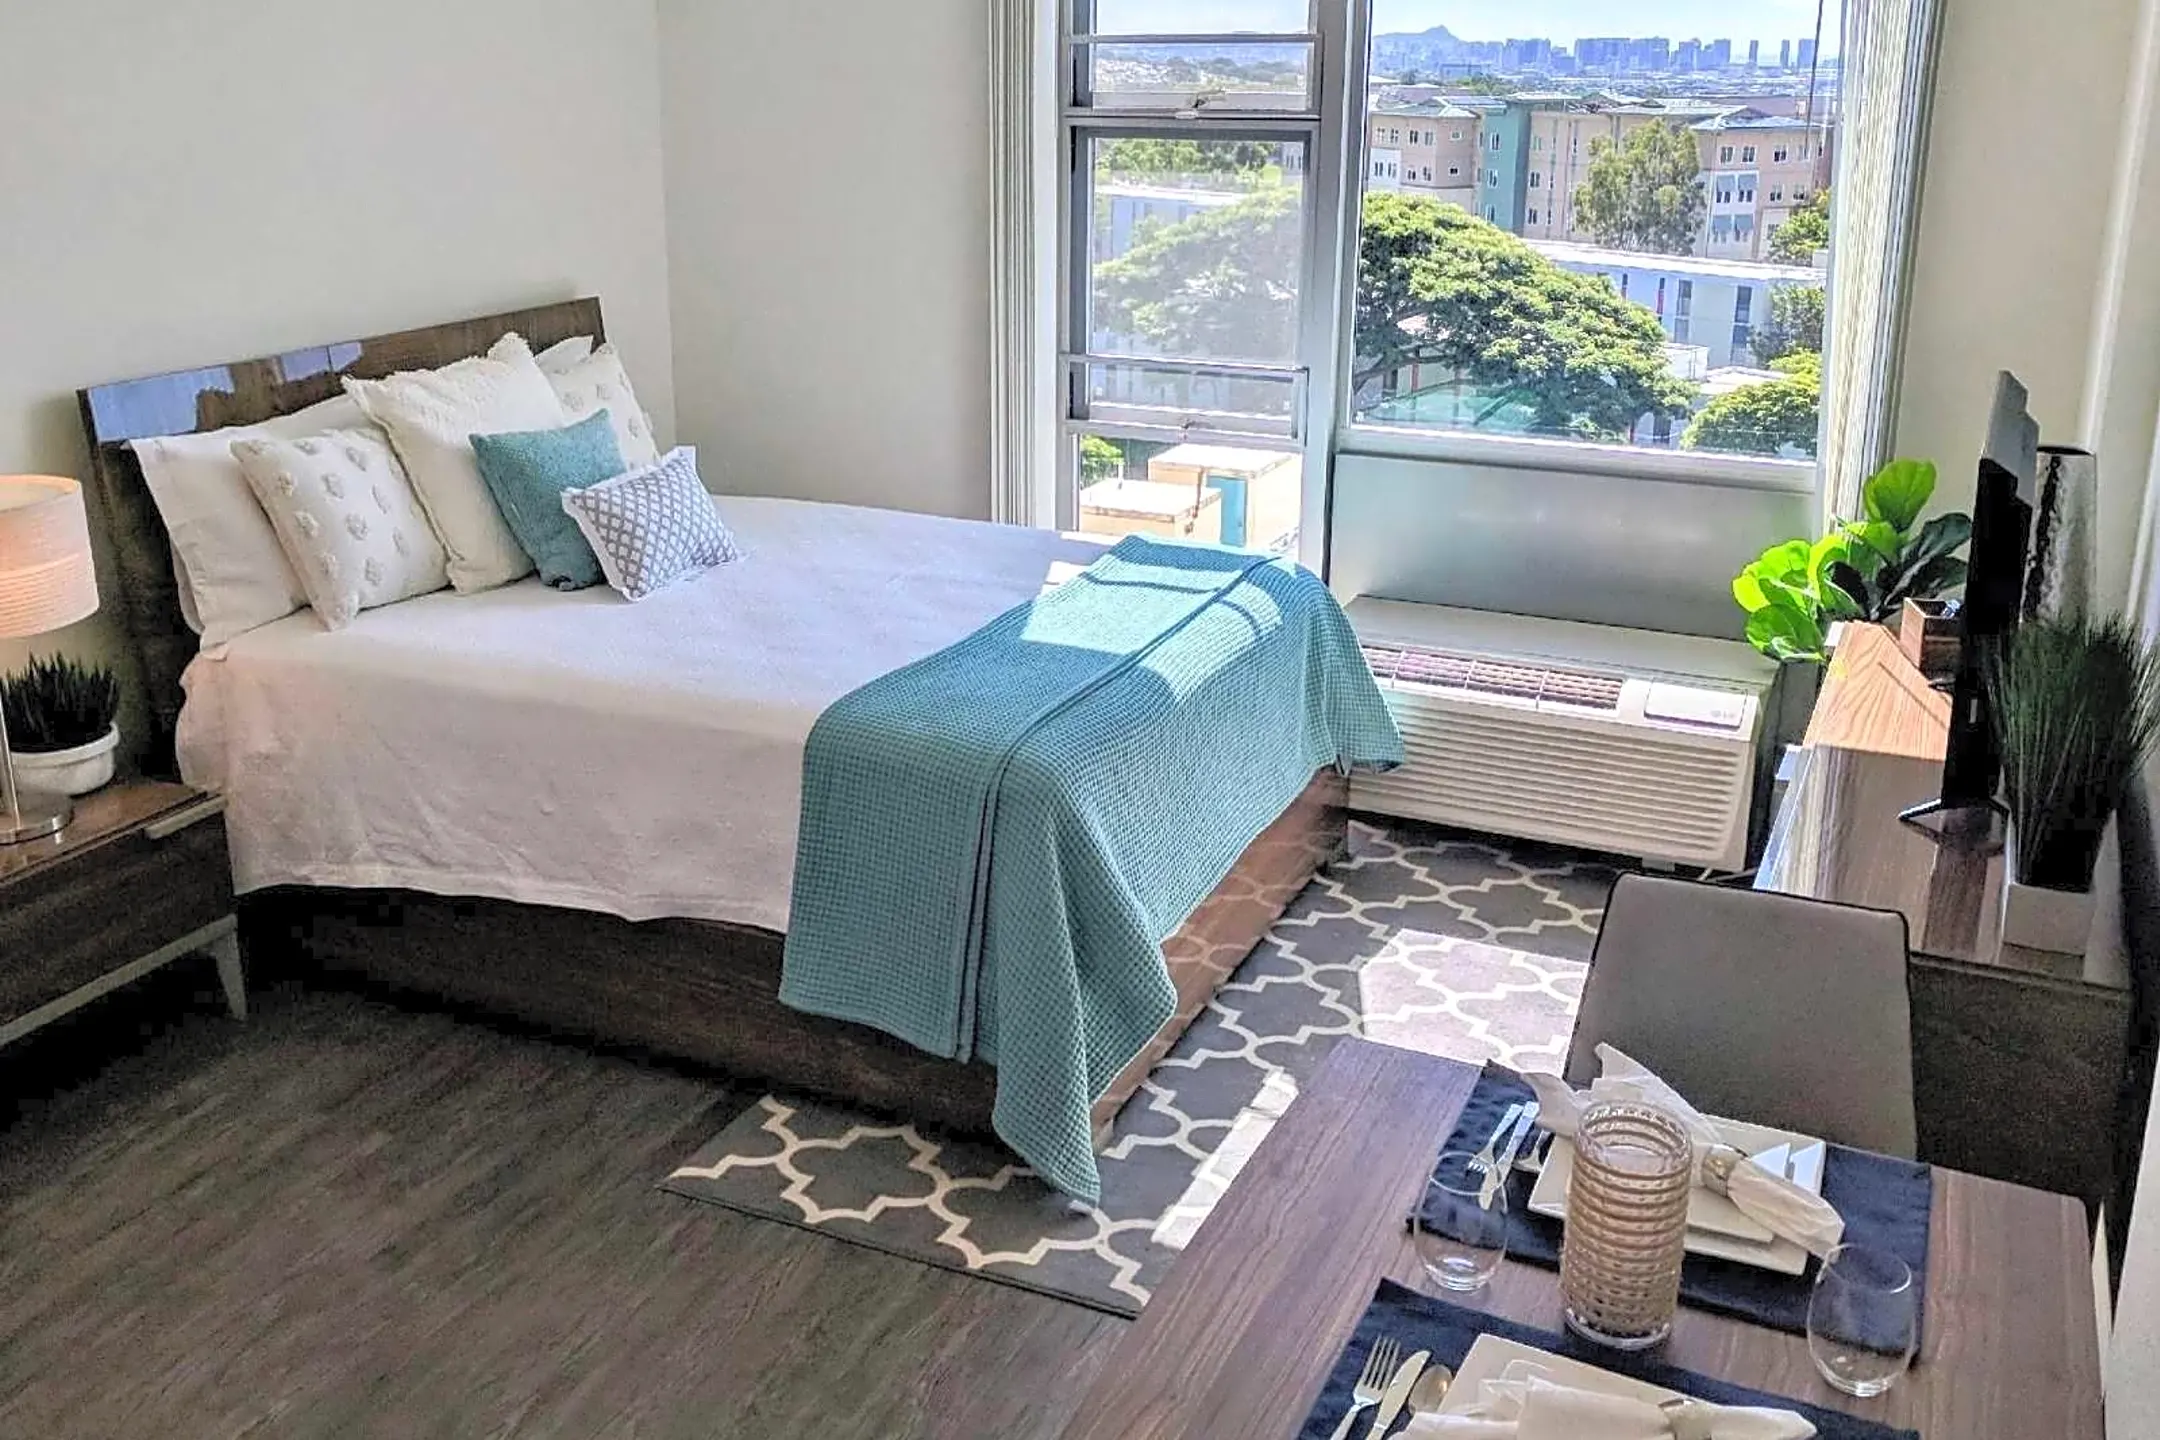 Bedroom - Moanalua Hillside Apartments - Honolulu, HI